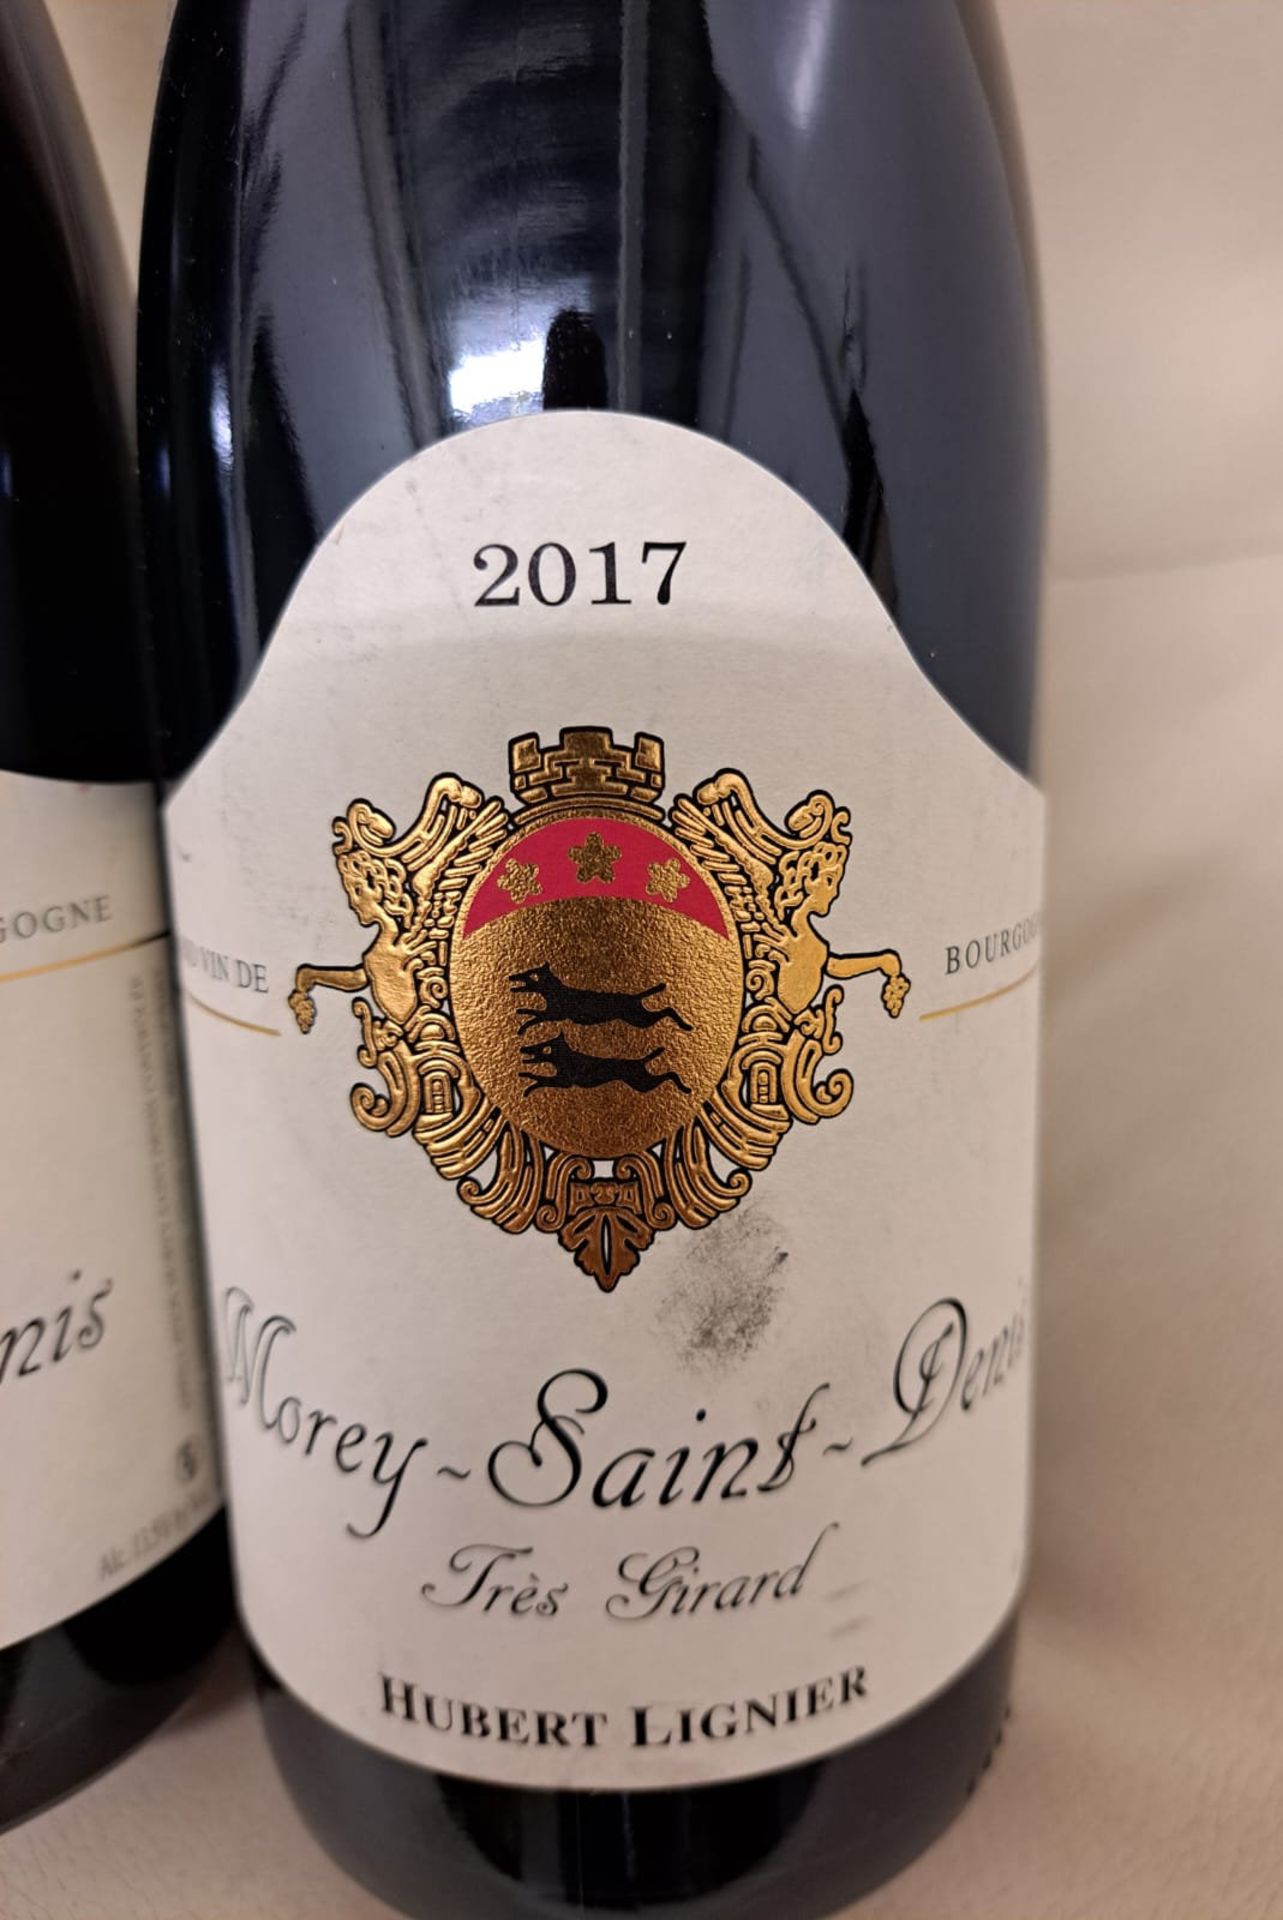 2 x Bottles of 2018 Domaine Hubert Lignier Morey-Saint-Denis Tres Girard Red Wine - Retail Price £ - Image 2 of 2